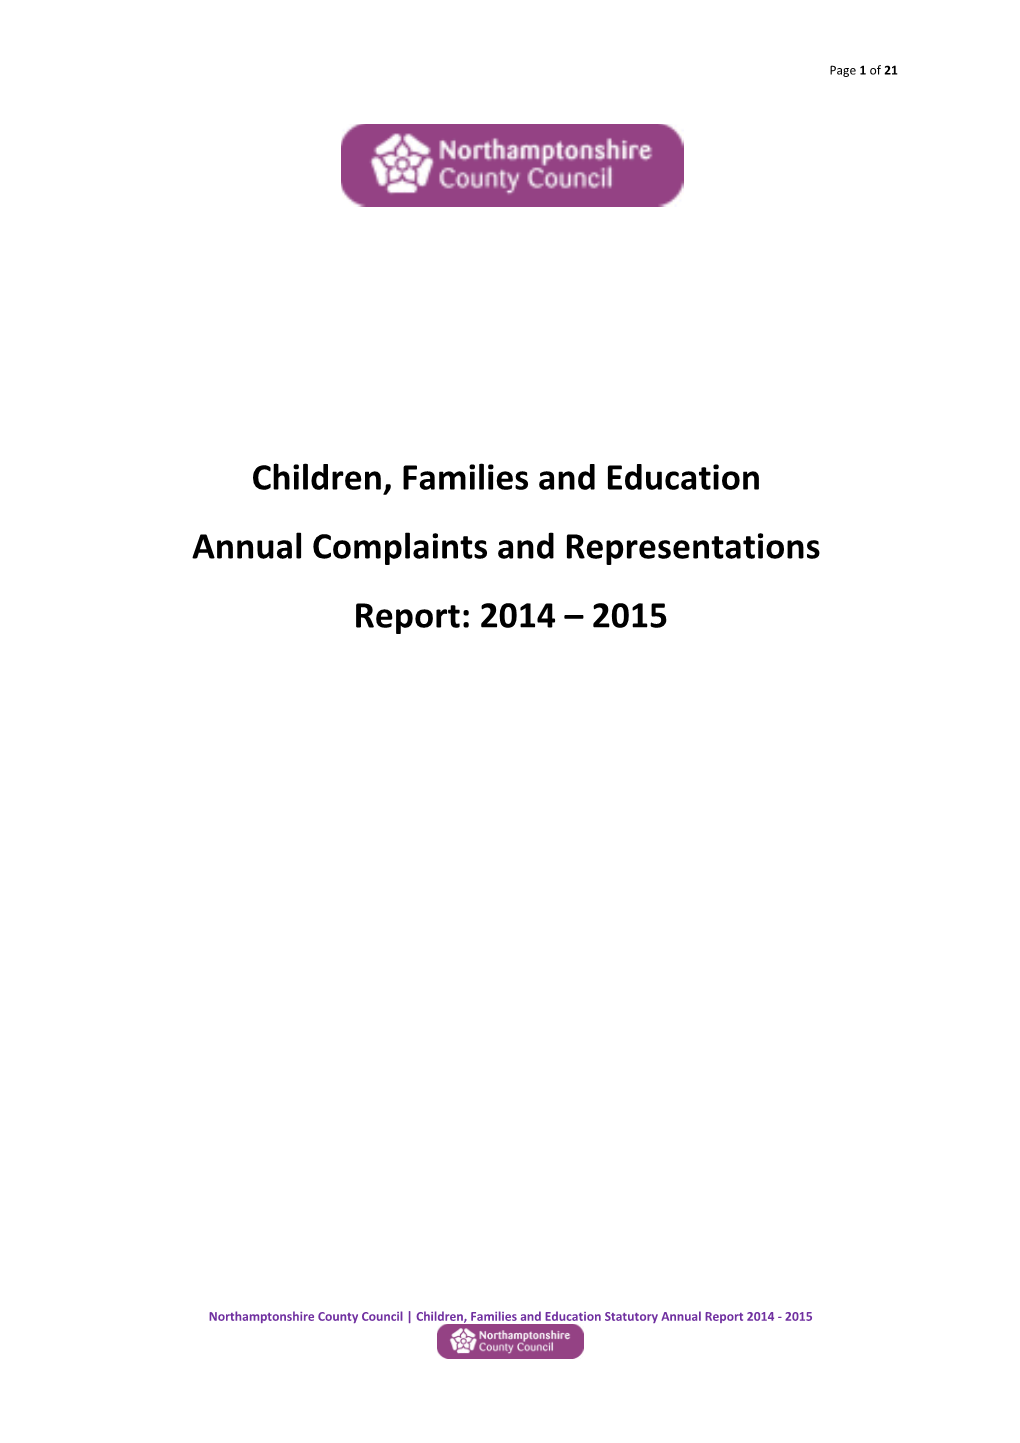 2014-15 Childrens Complaints Annual Report